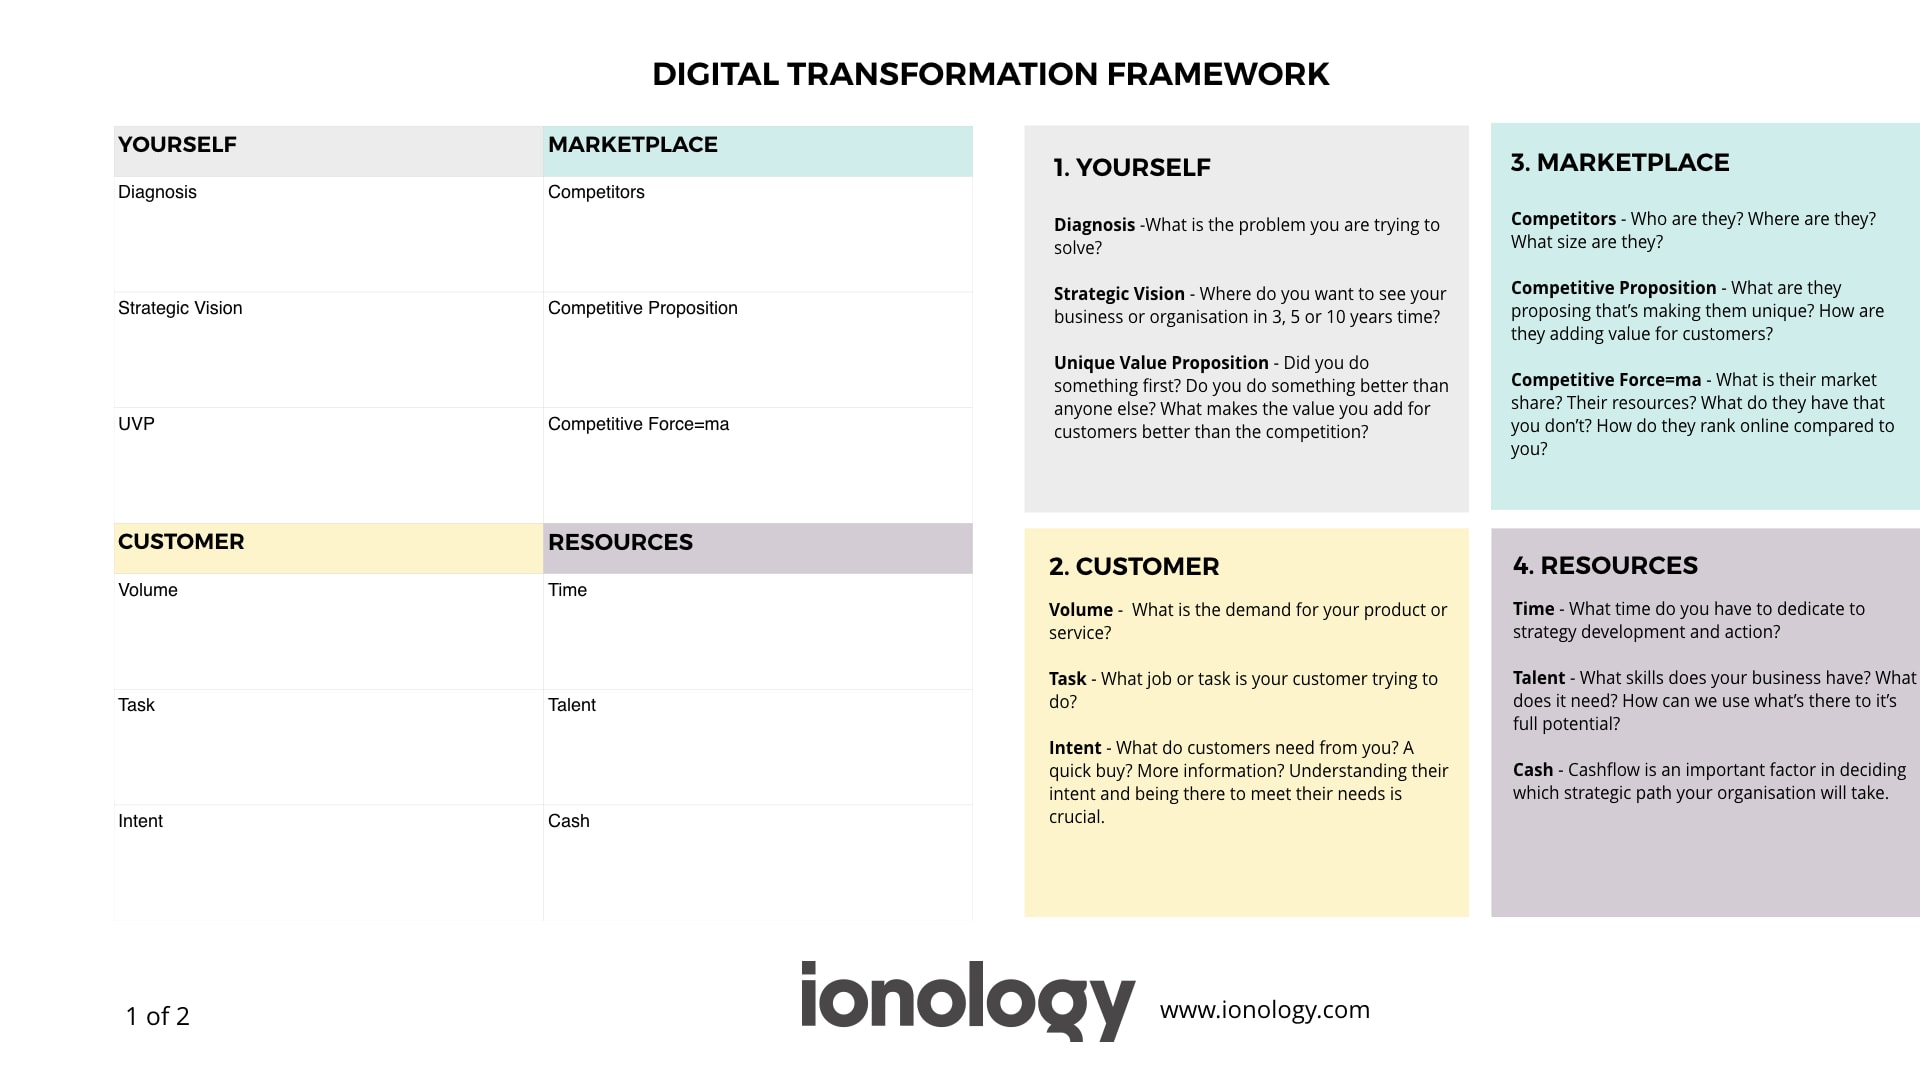 Ionology Digital Transformation Framework - Part 1 of 2